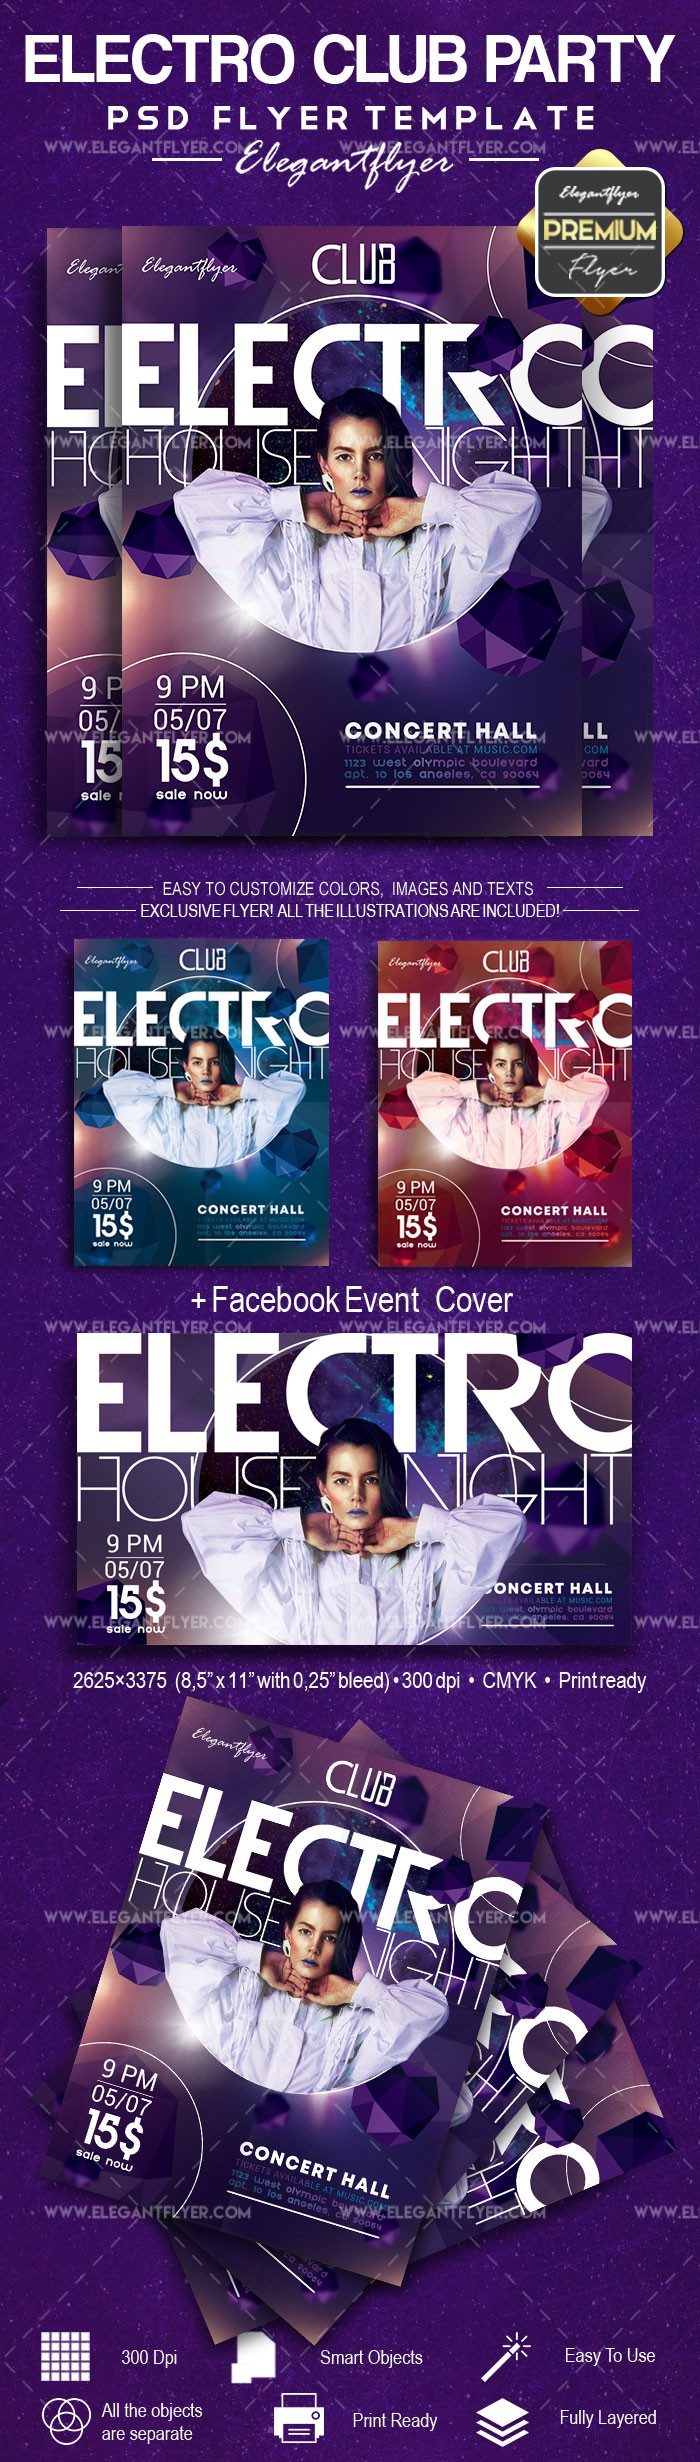 Electro Club Party by ElegantFlyer